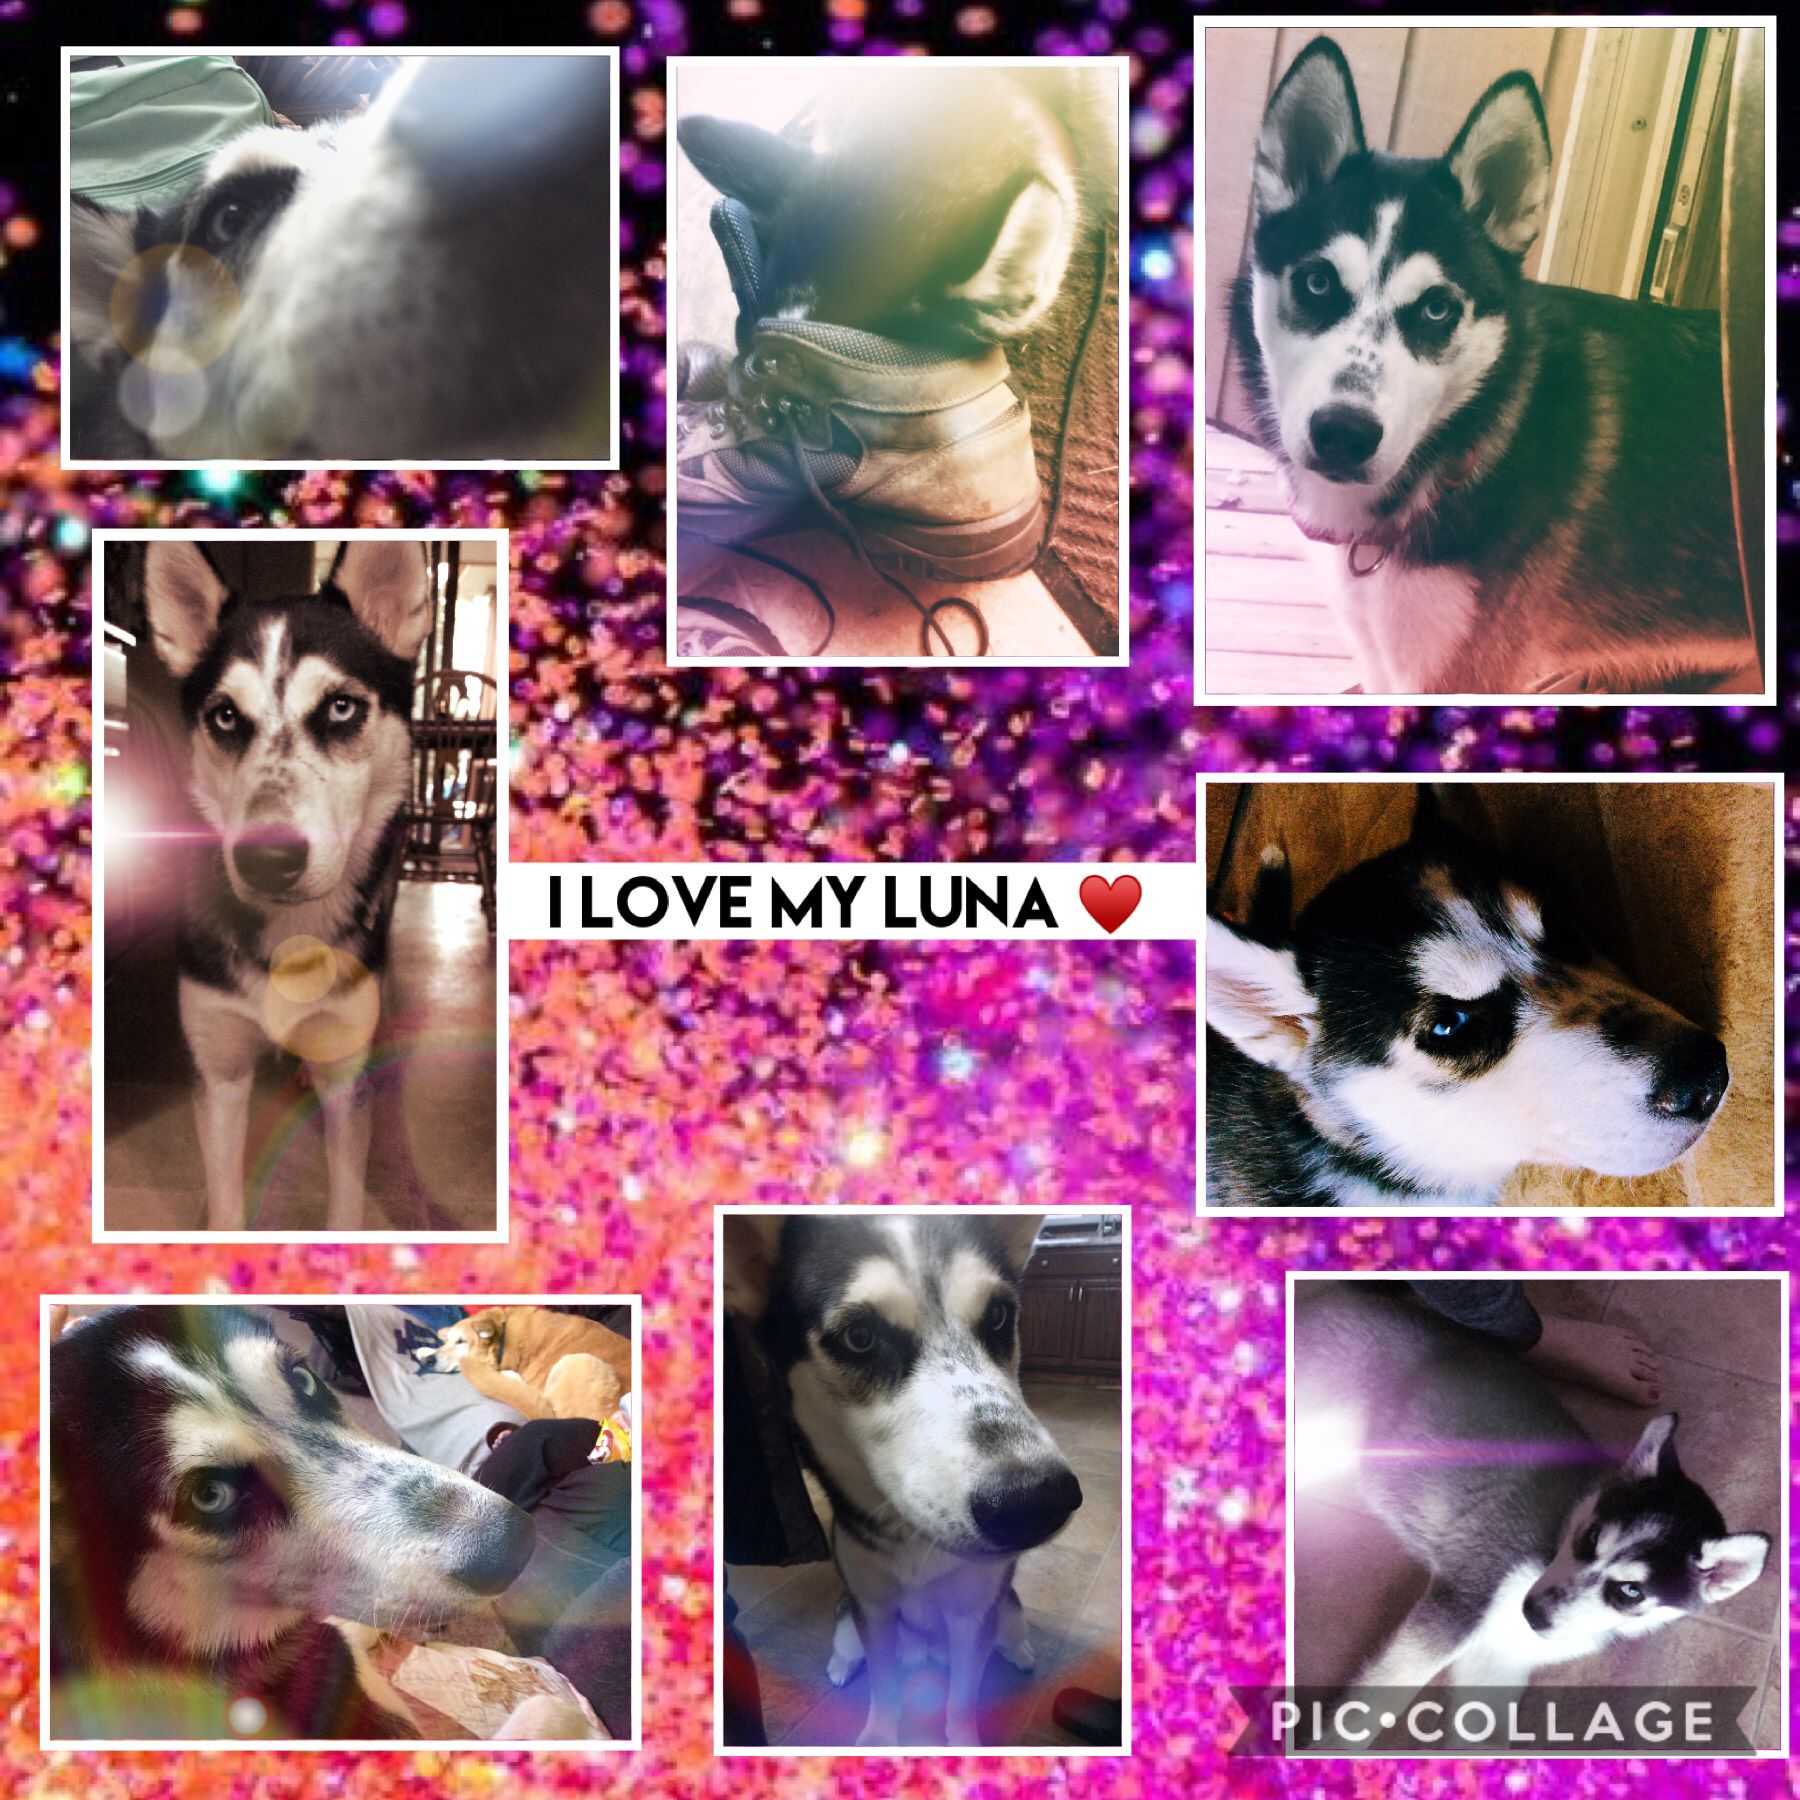 This is my husky, Luna!